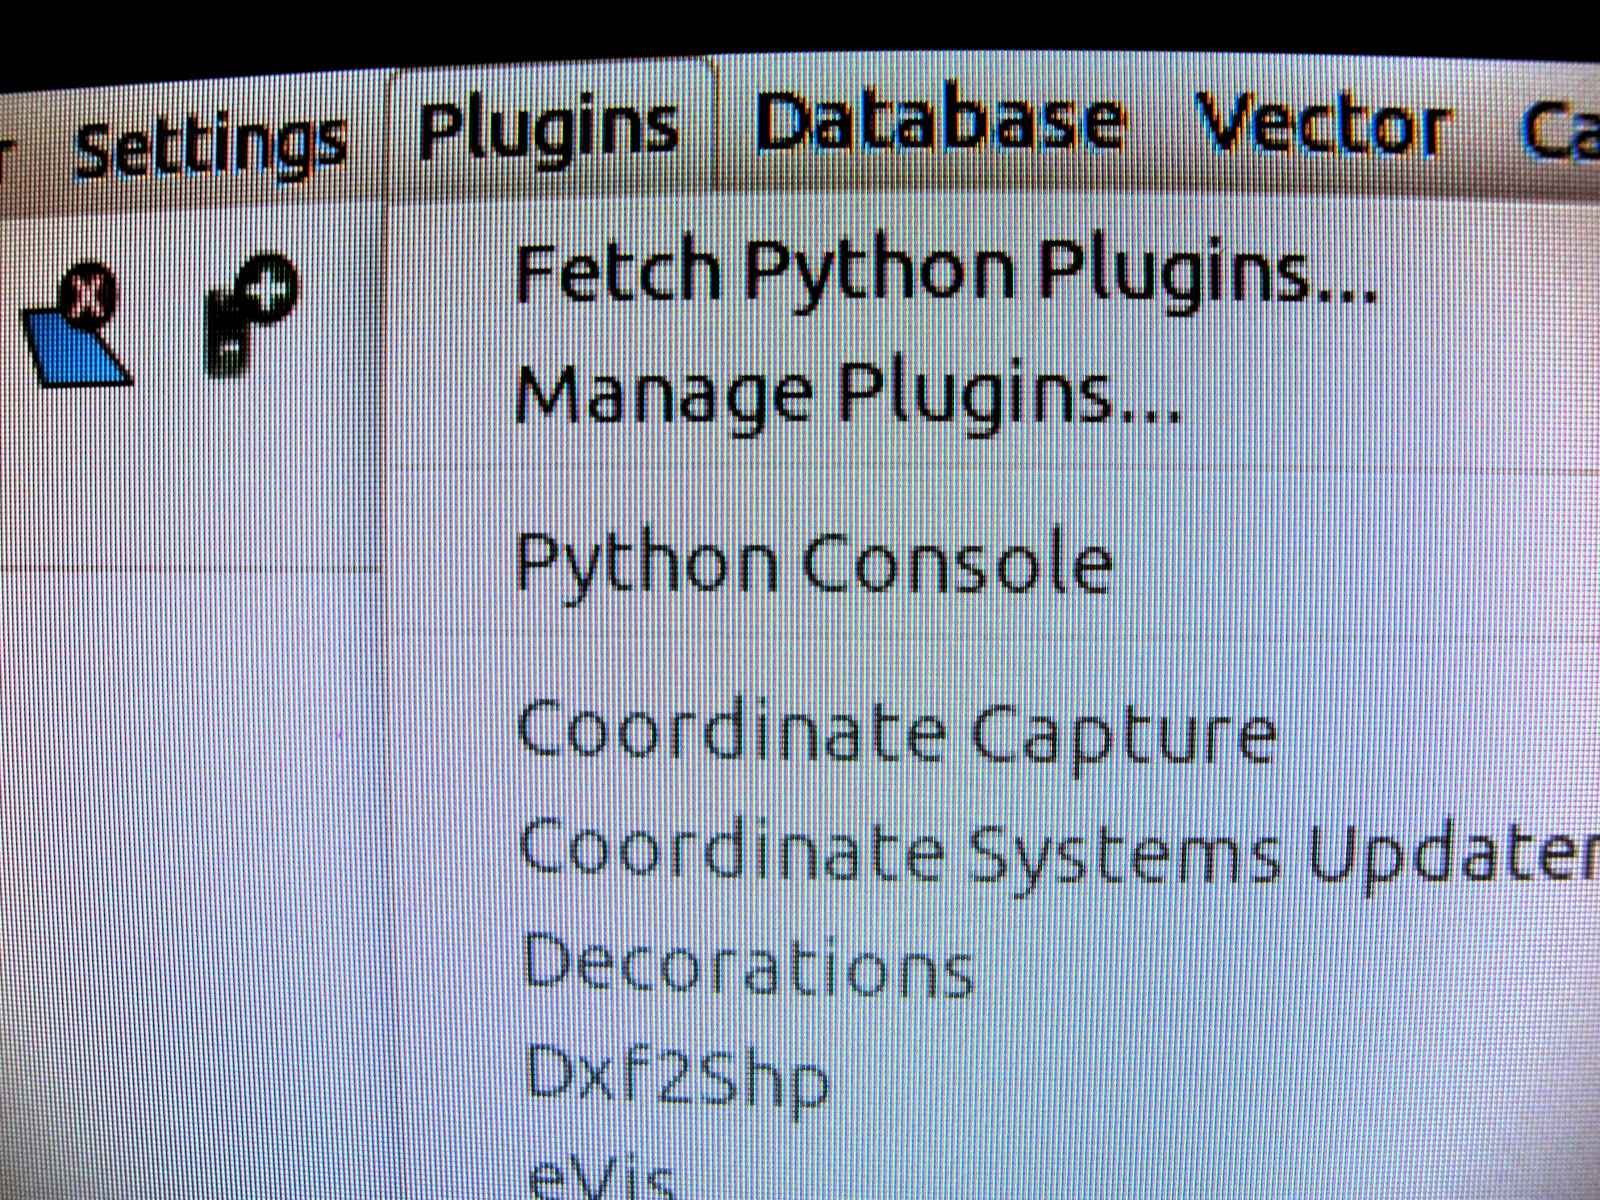 Missing Fetch Python Plugins